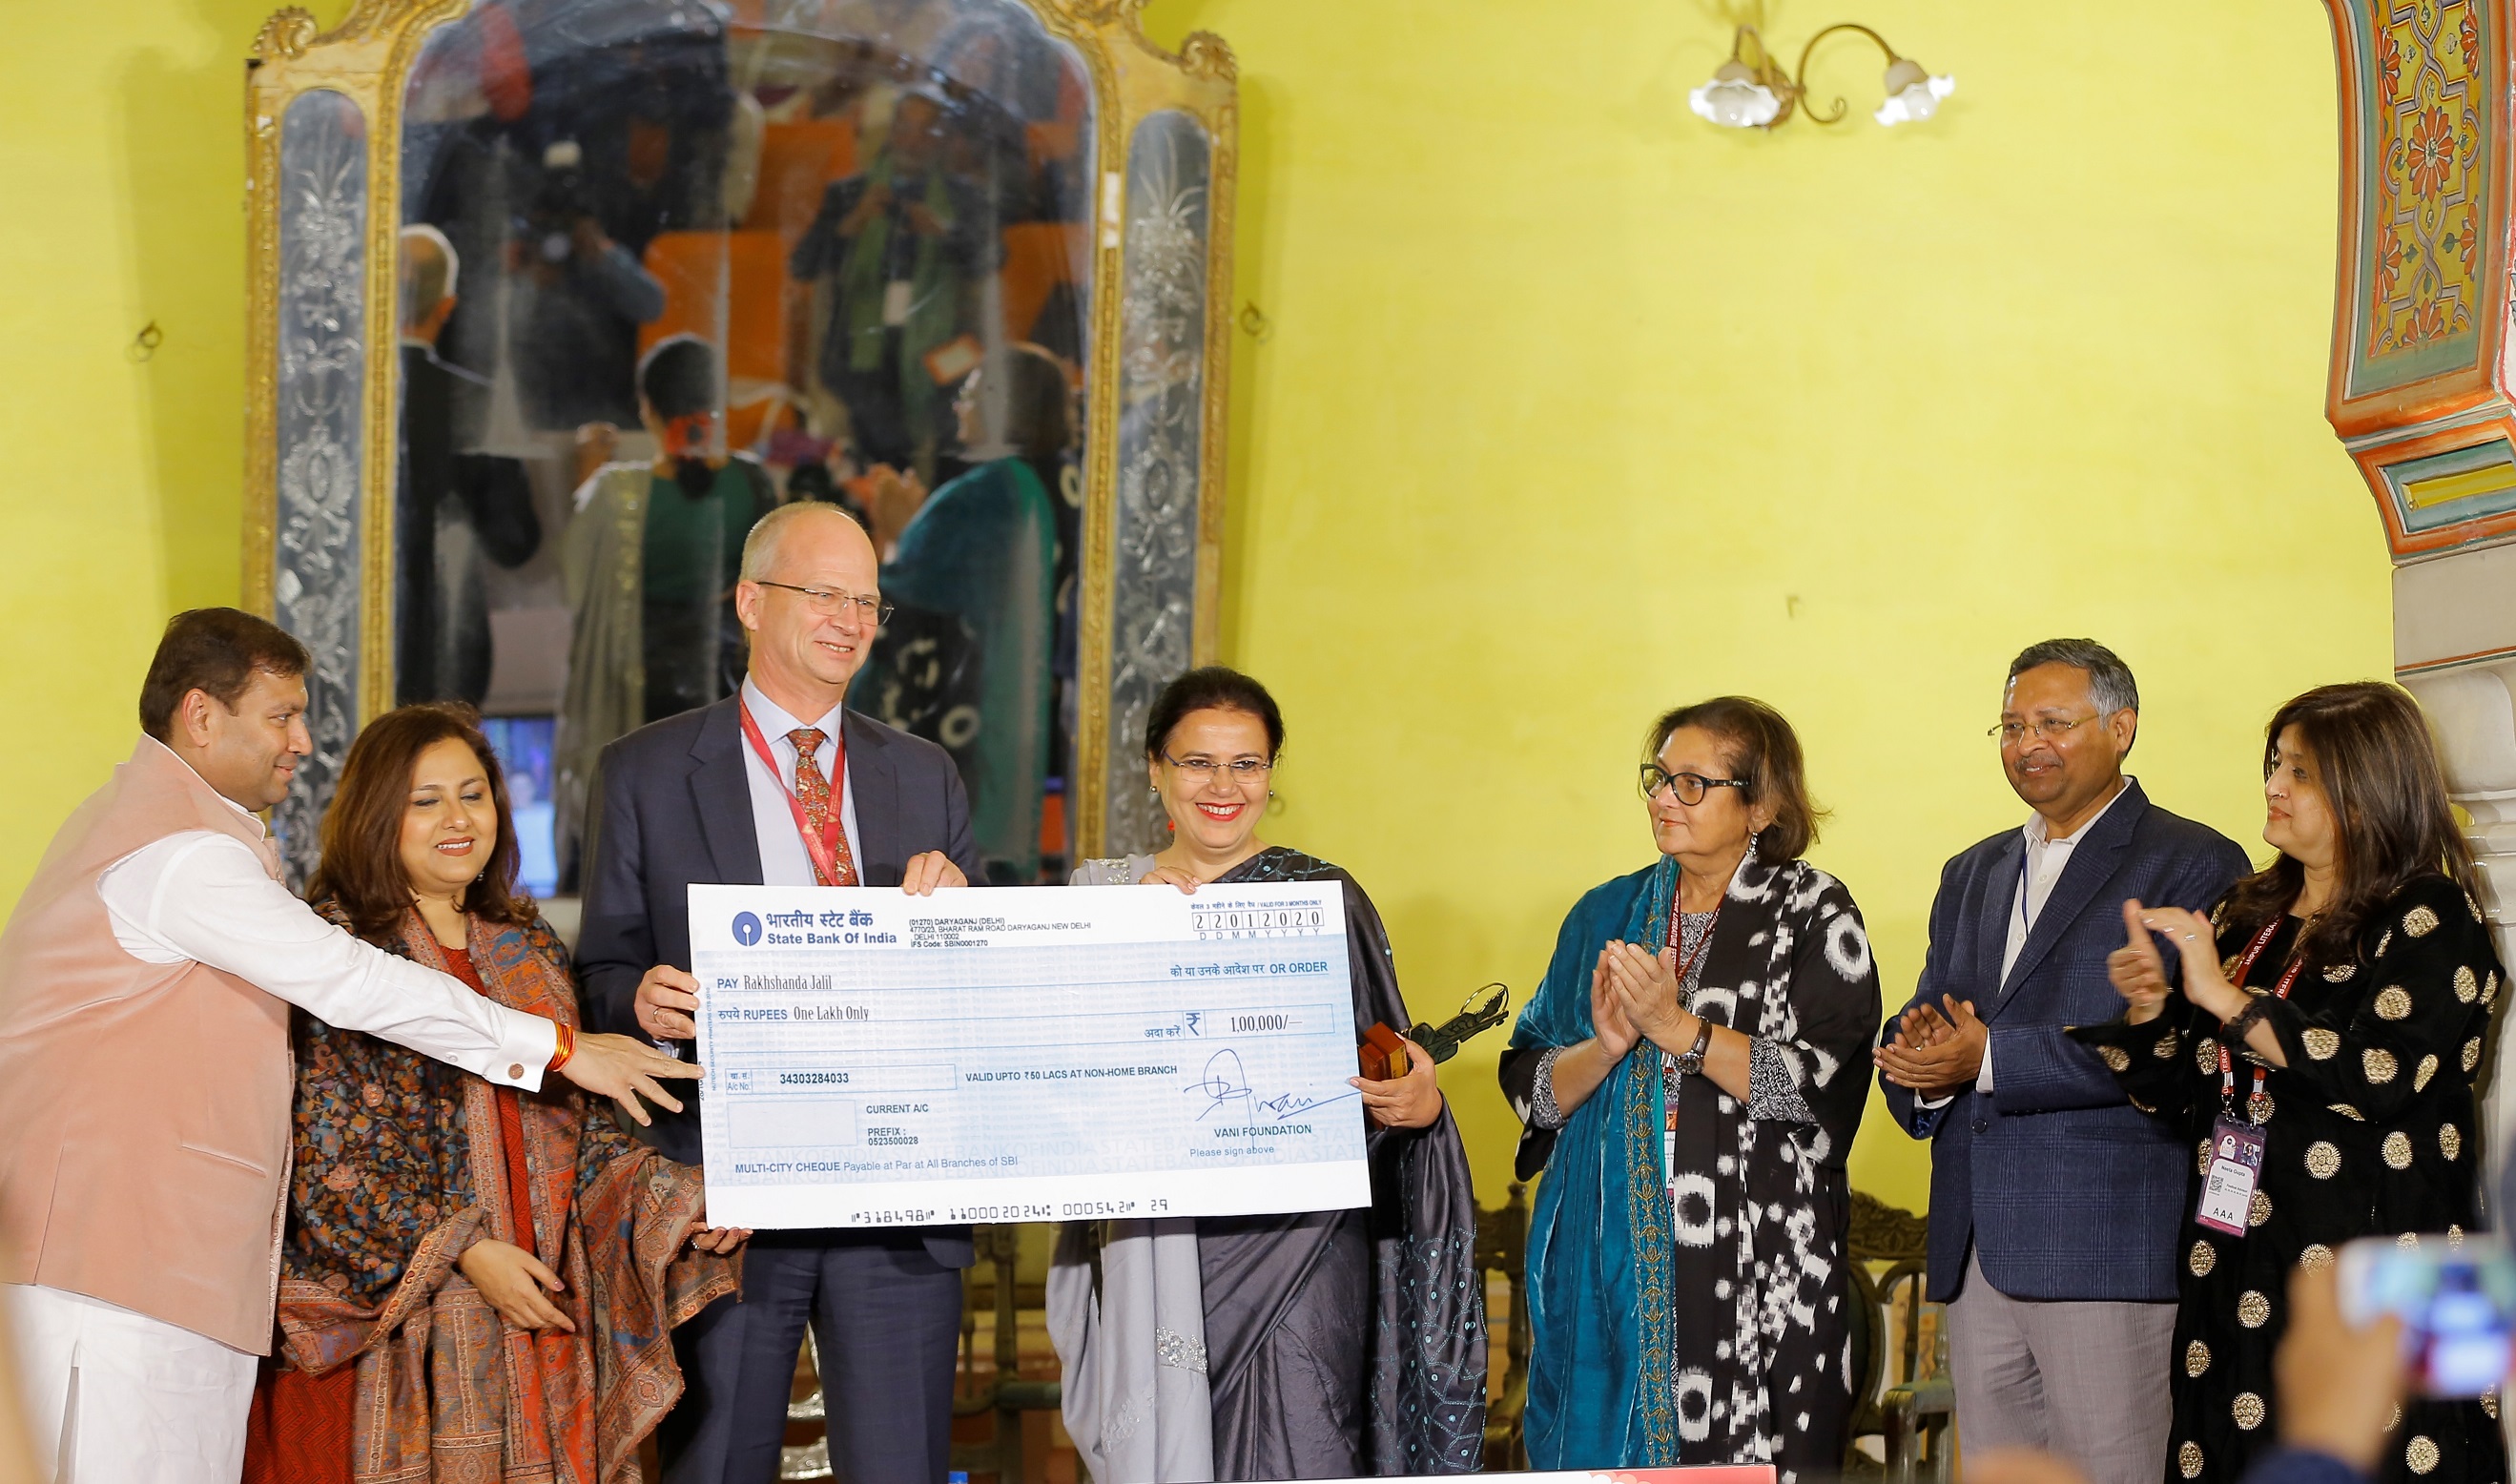 डॉ.रक्षंदा जलील को वाणी फ़ाउण्डेशन विशिष्ट अनुवादक पुरस्कार